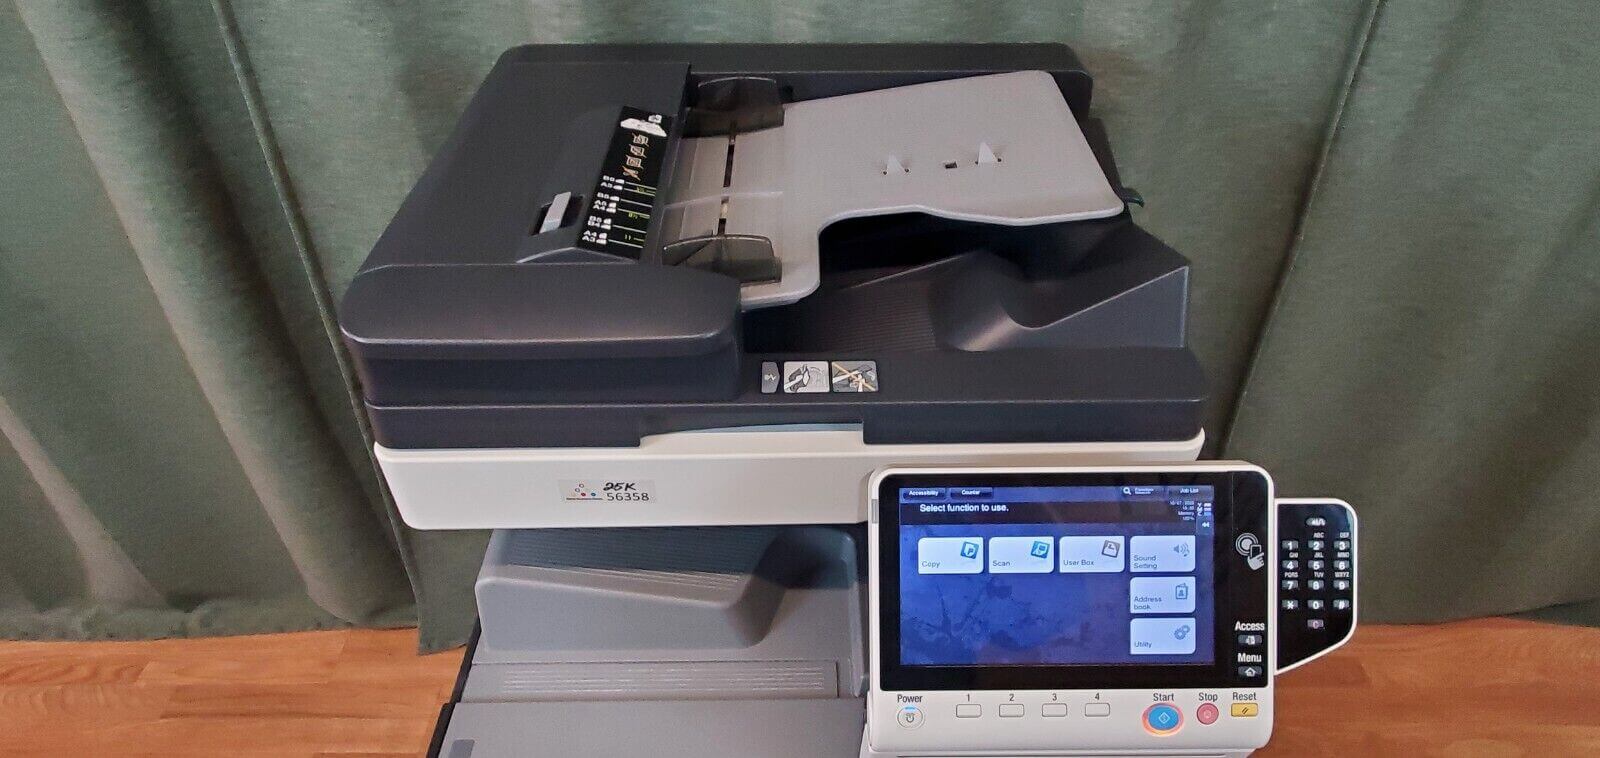 Konica Minolta Bizhub C258 Color Copier Printer Scan Fax Network Low 25K Usage!! - copier-clearance-center